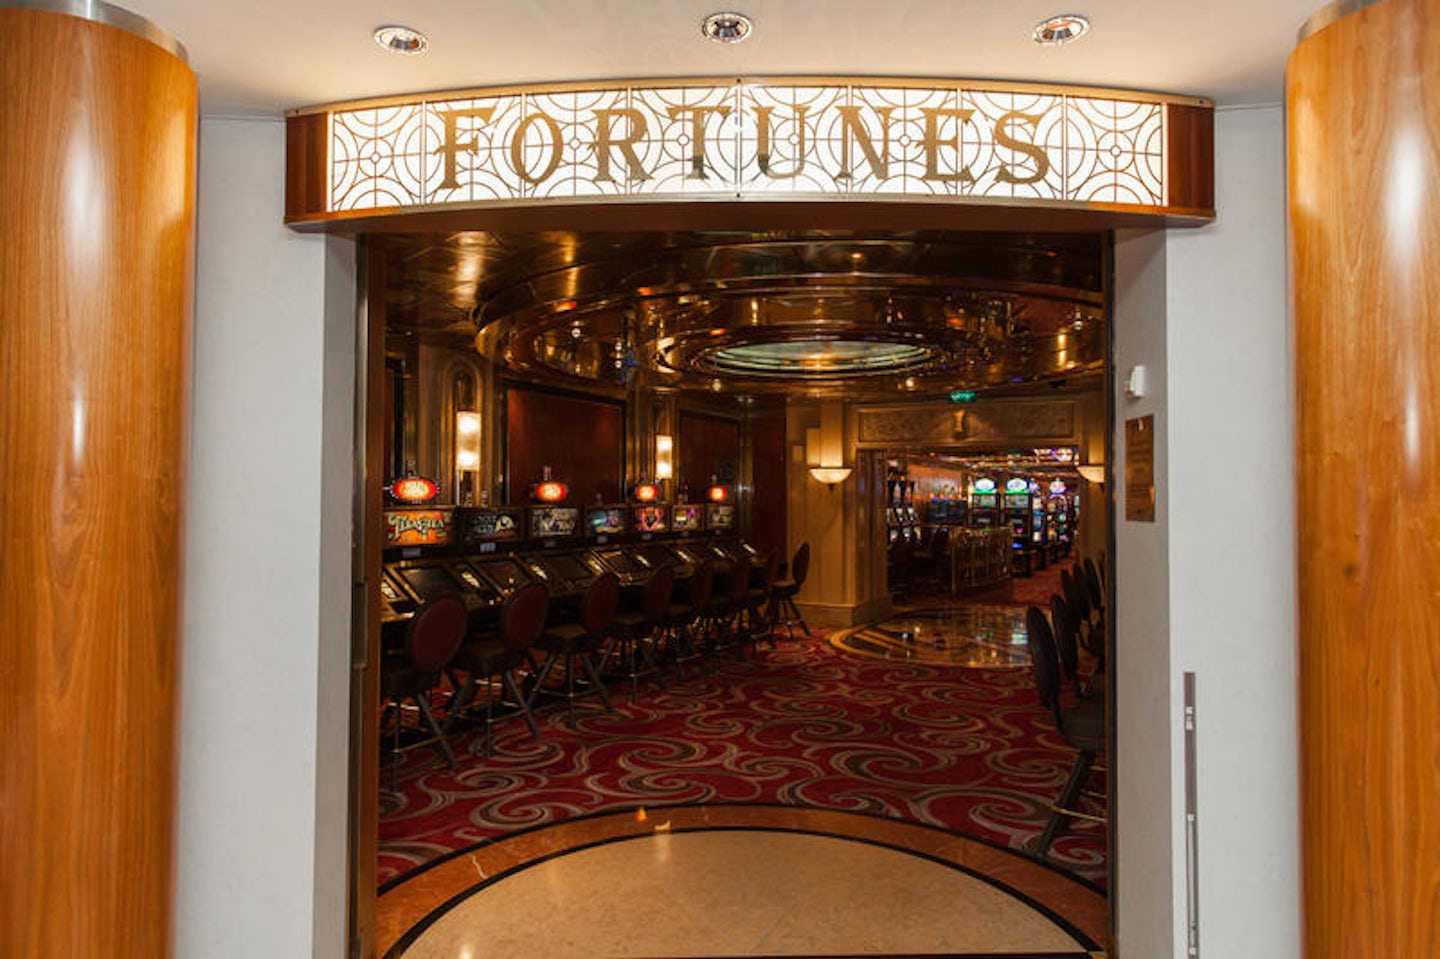 Fortunes Casino on Celebrity Constellation